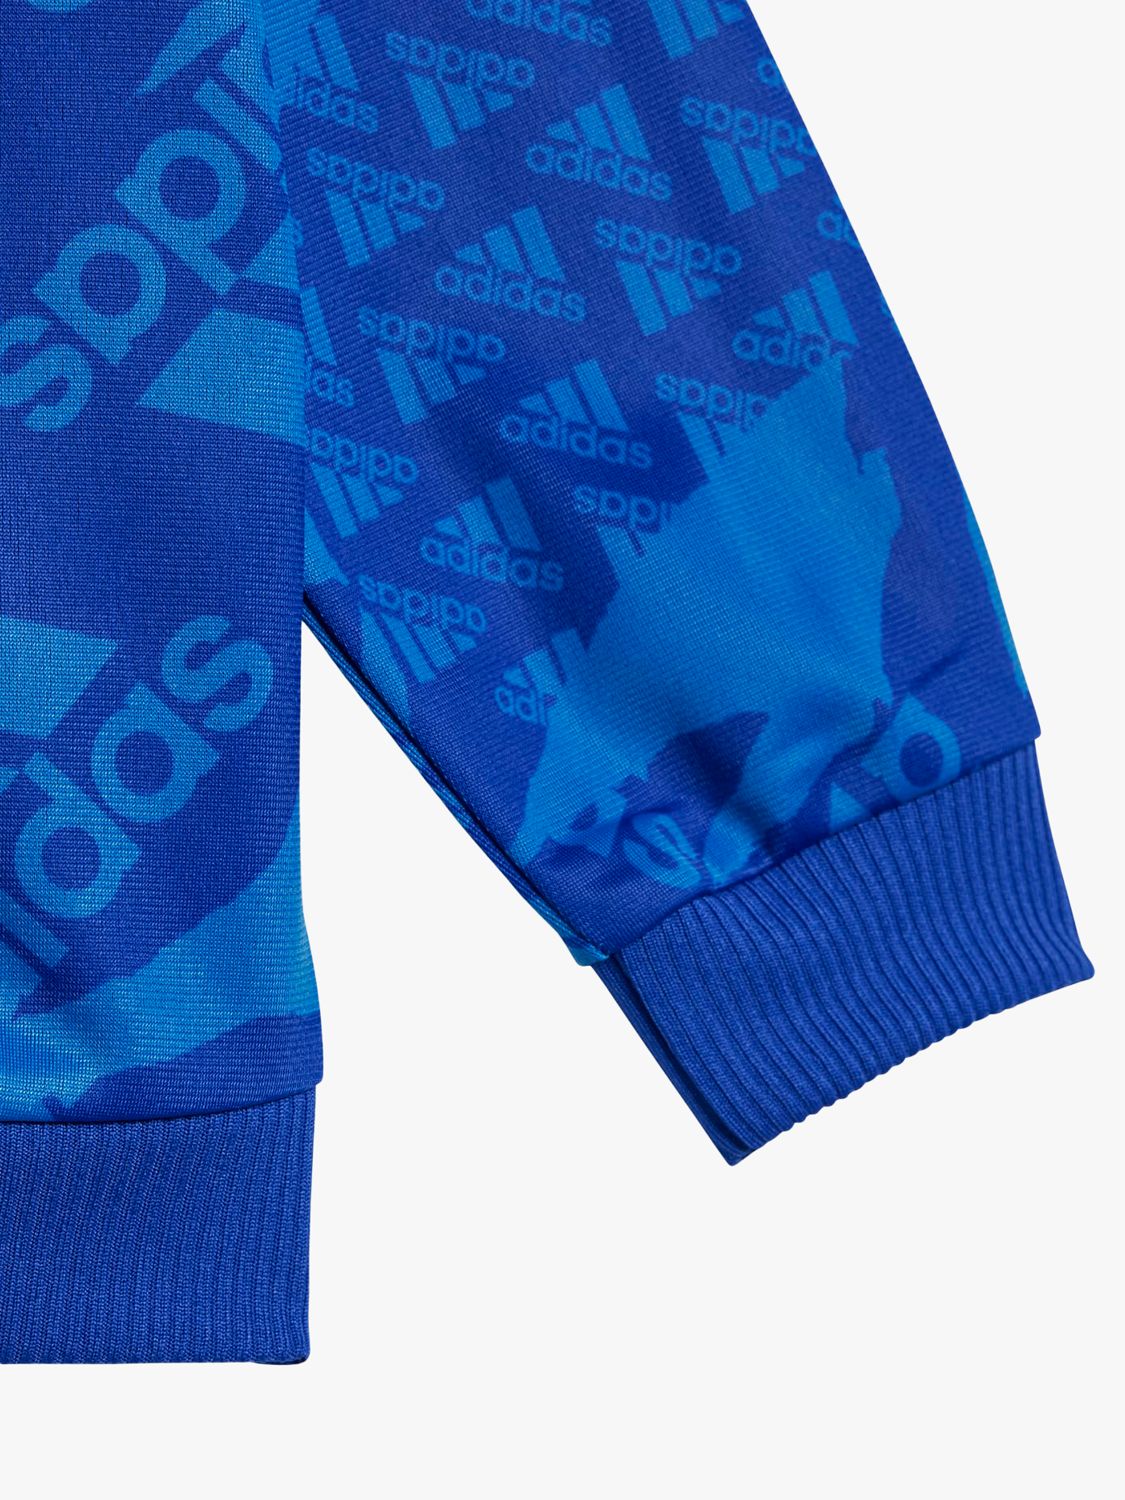 adidas Baby AEROREADY Camo Logo Tracksuit Set, Royal Blue, 2-3 years